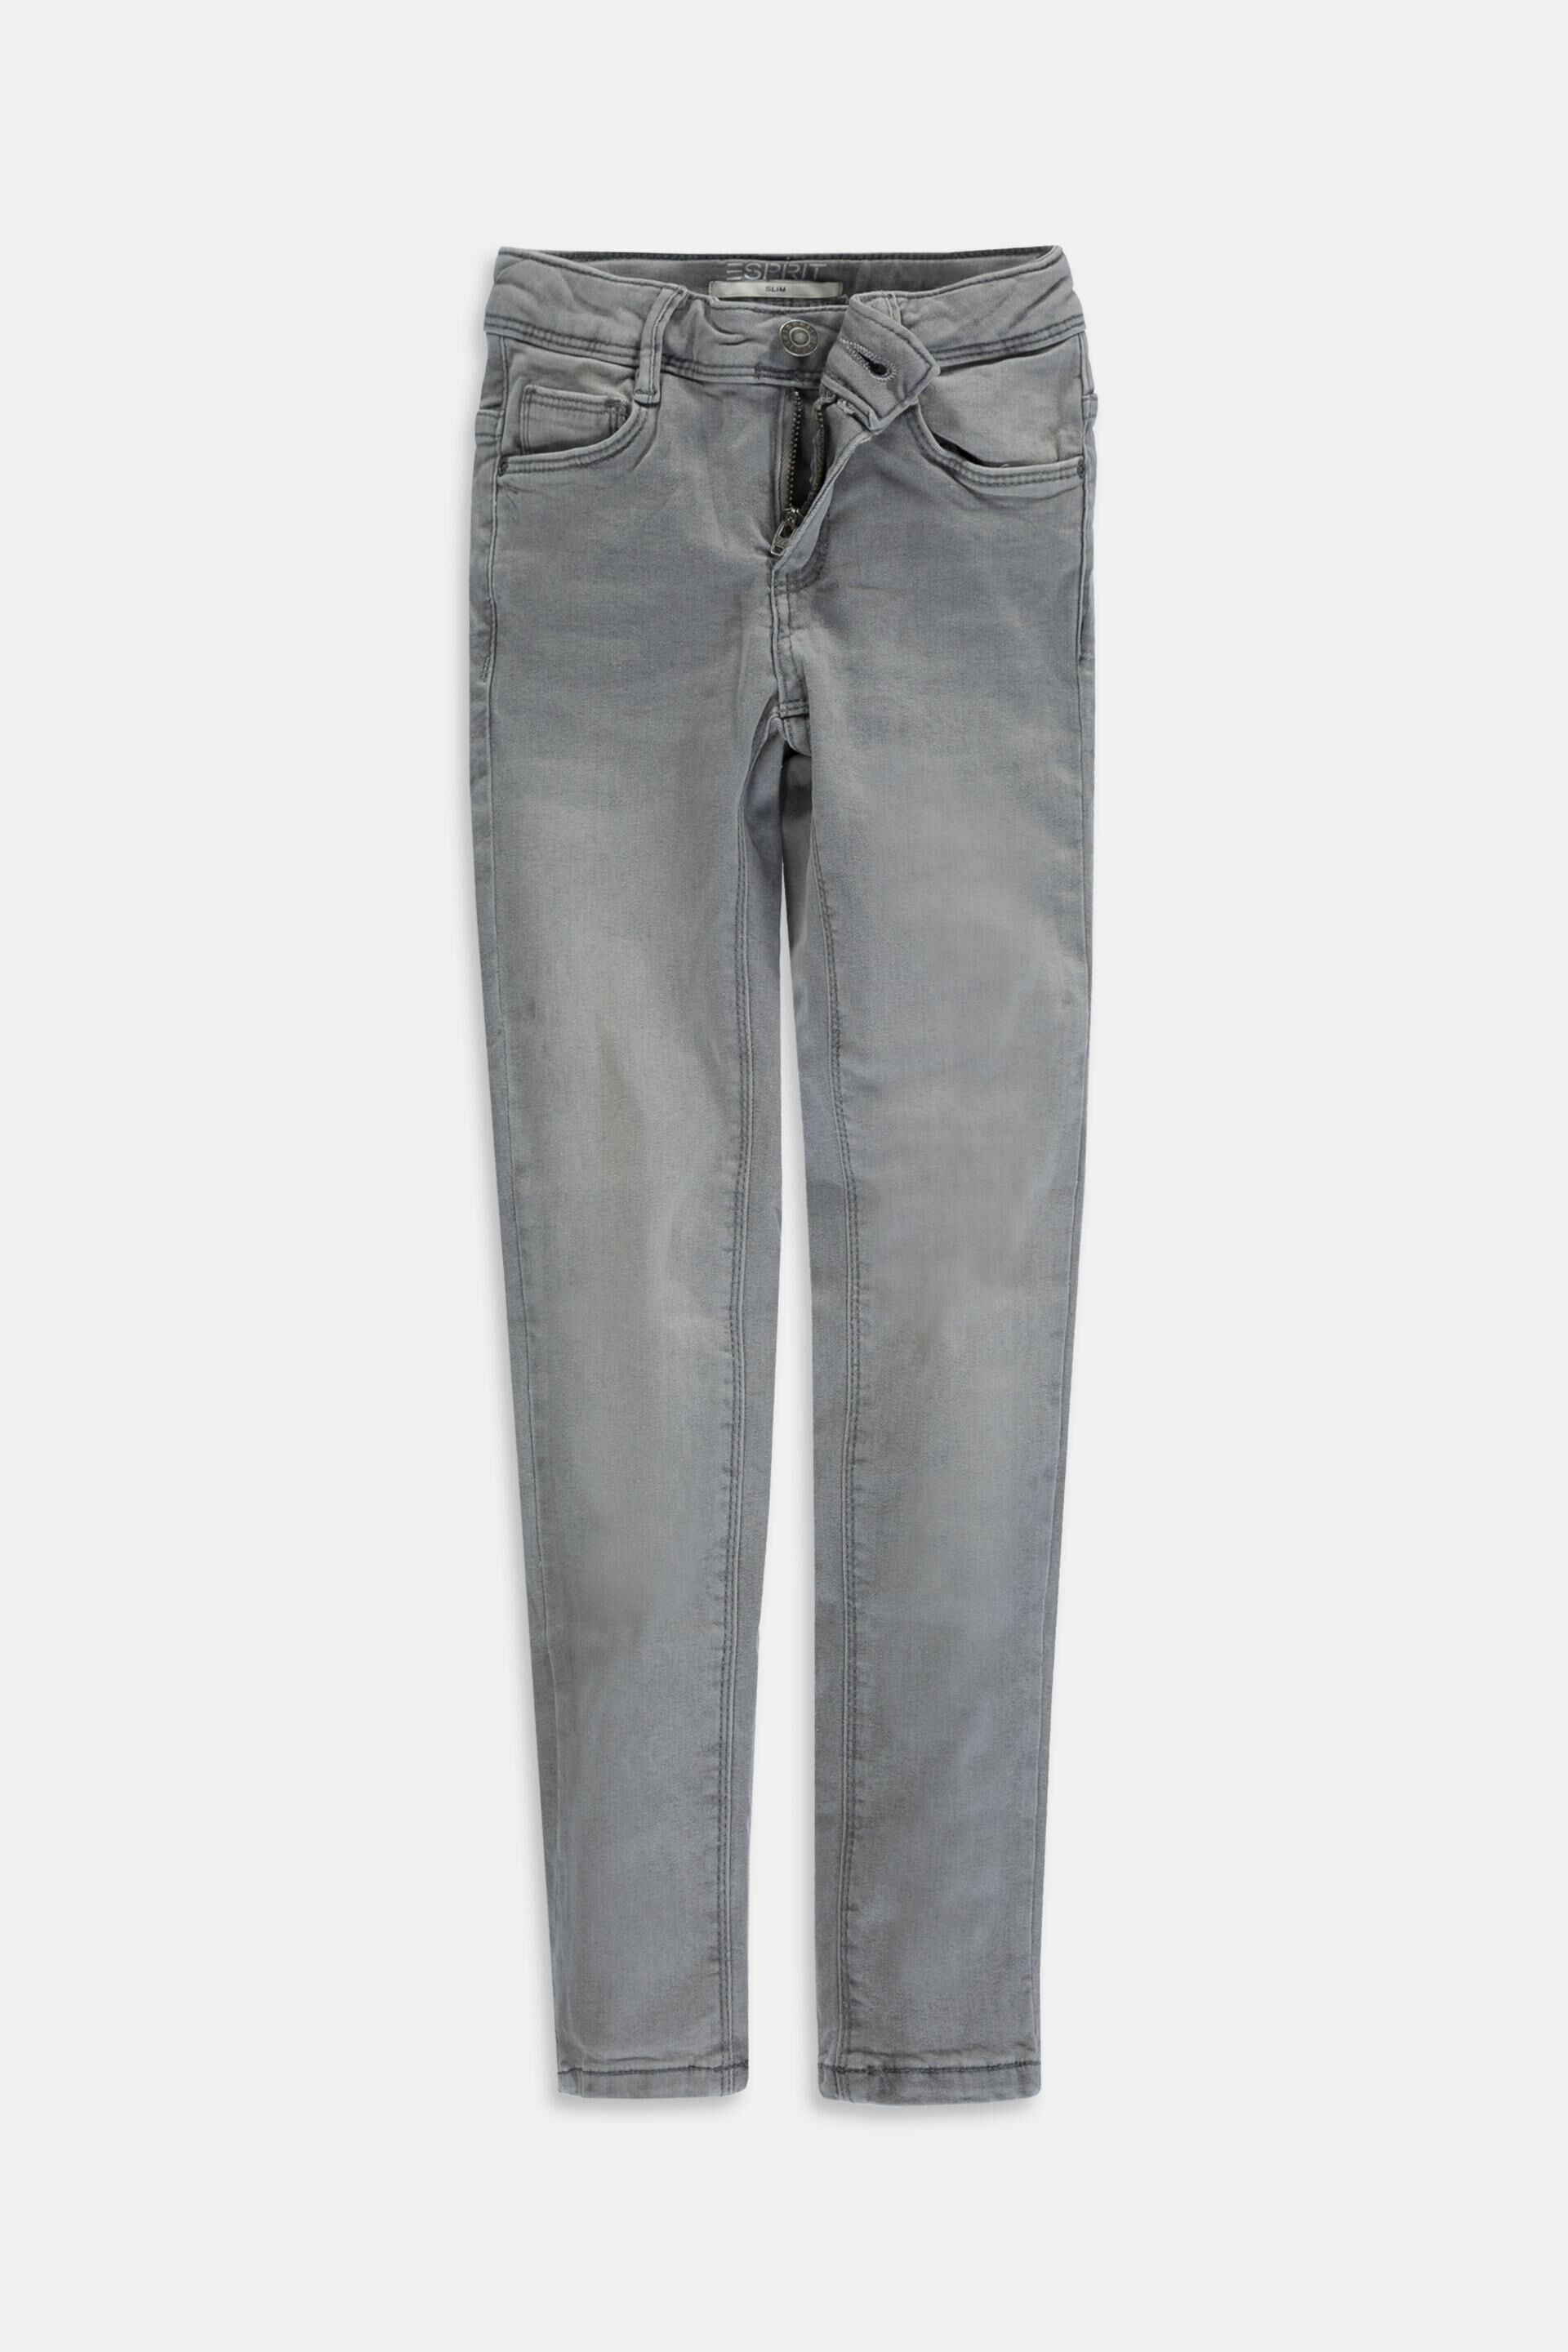 Esprit Teppich Jeans with an adjustable waistband